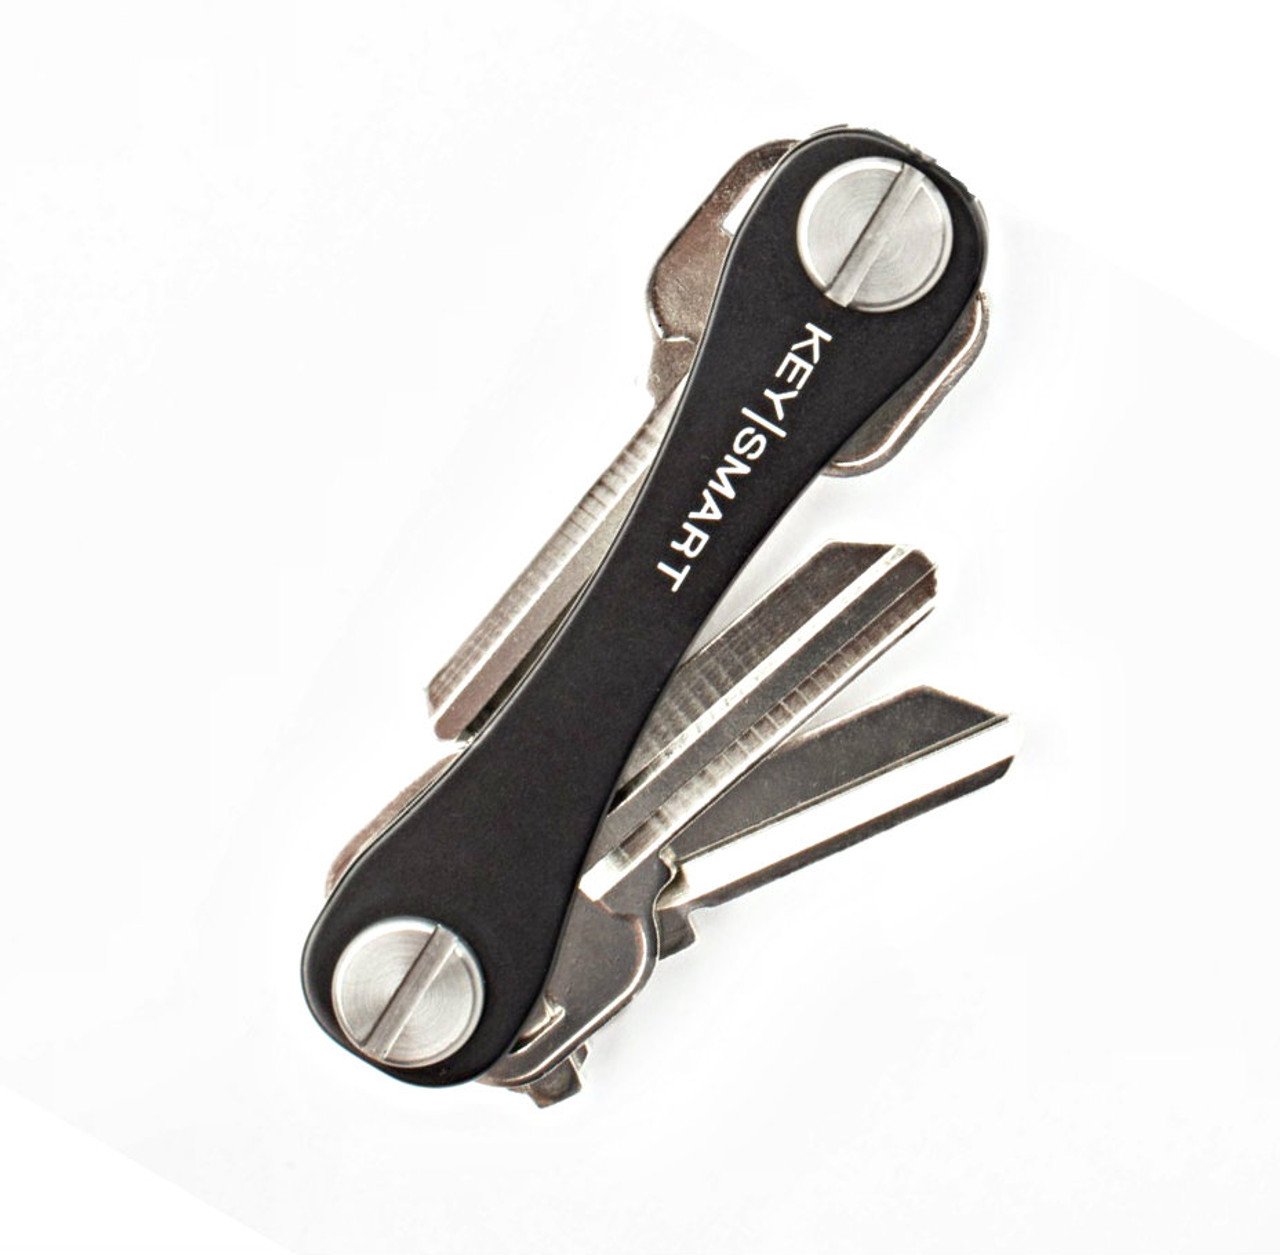 KeySmart 2.0 Swiss Army Style Key Holder (Black)